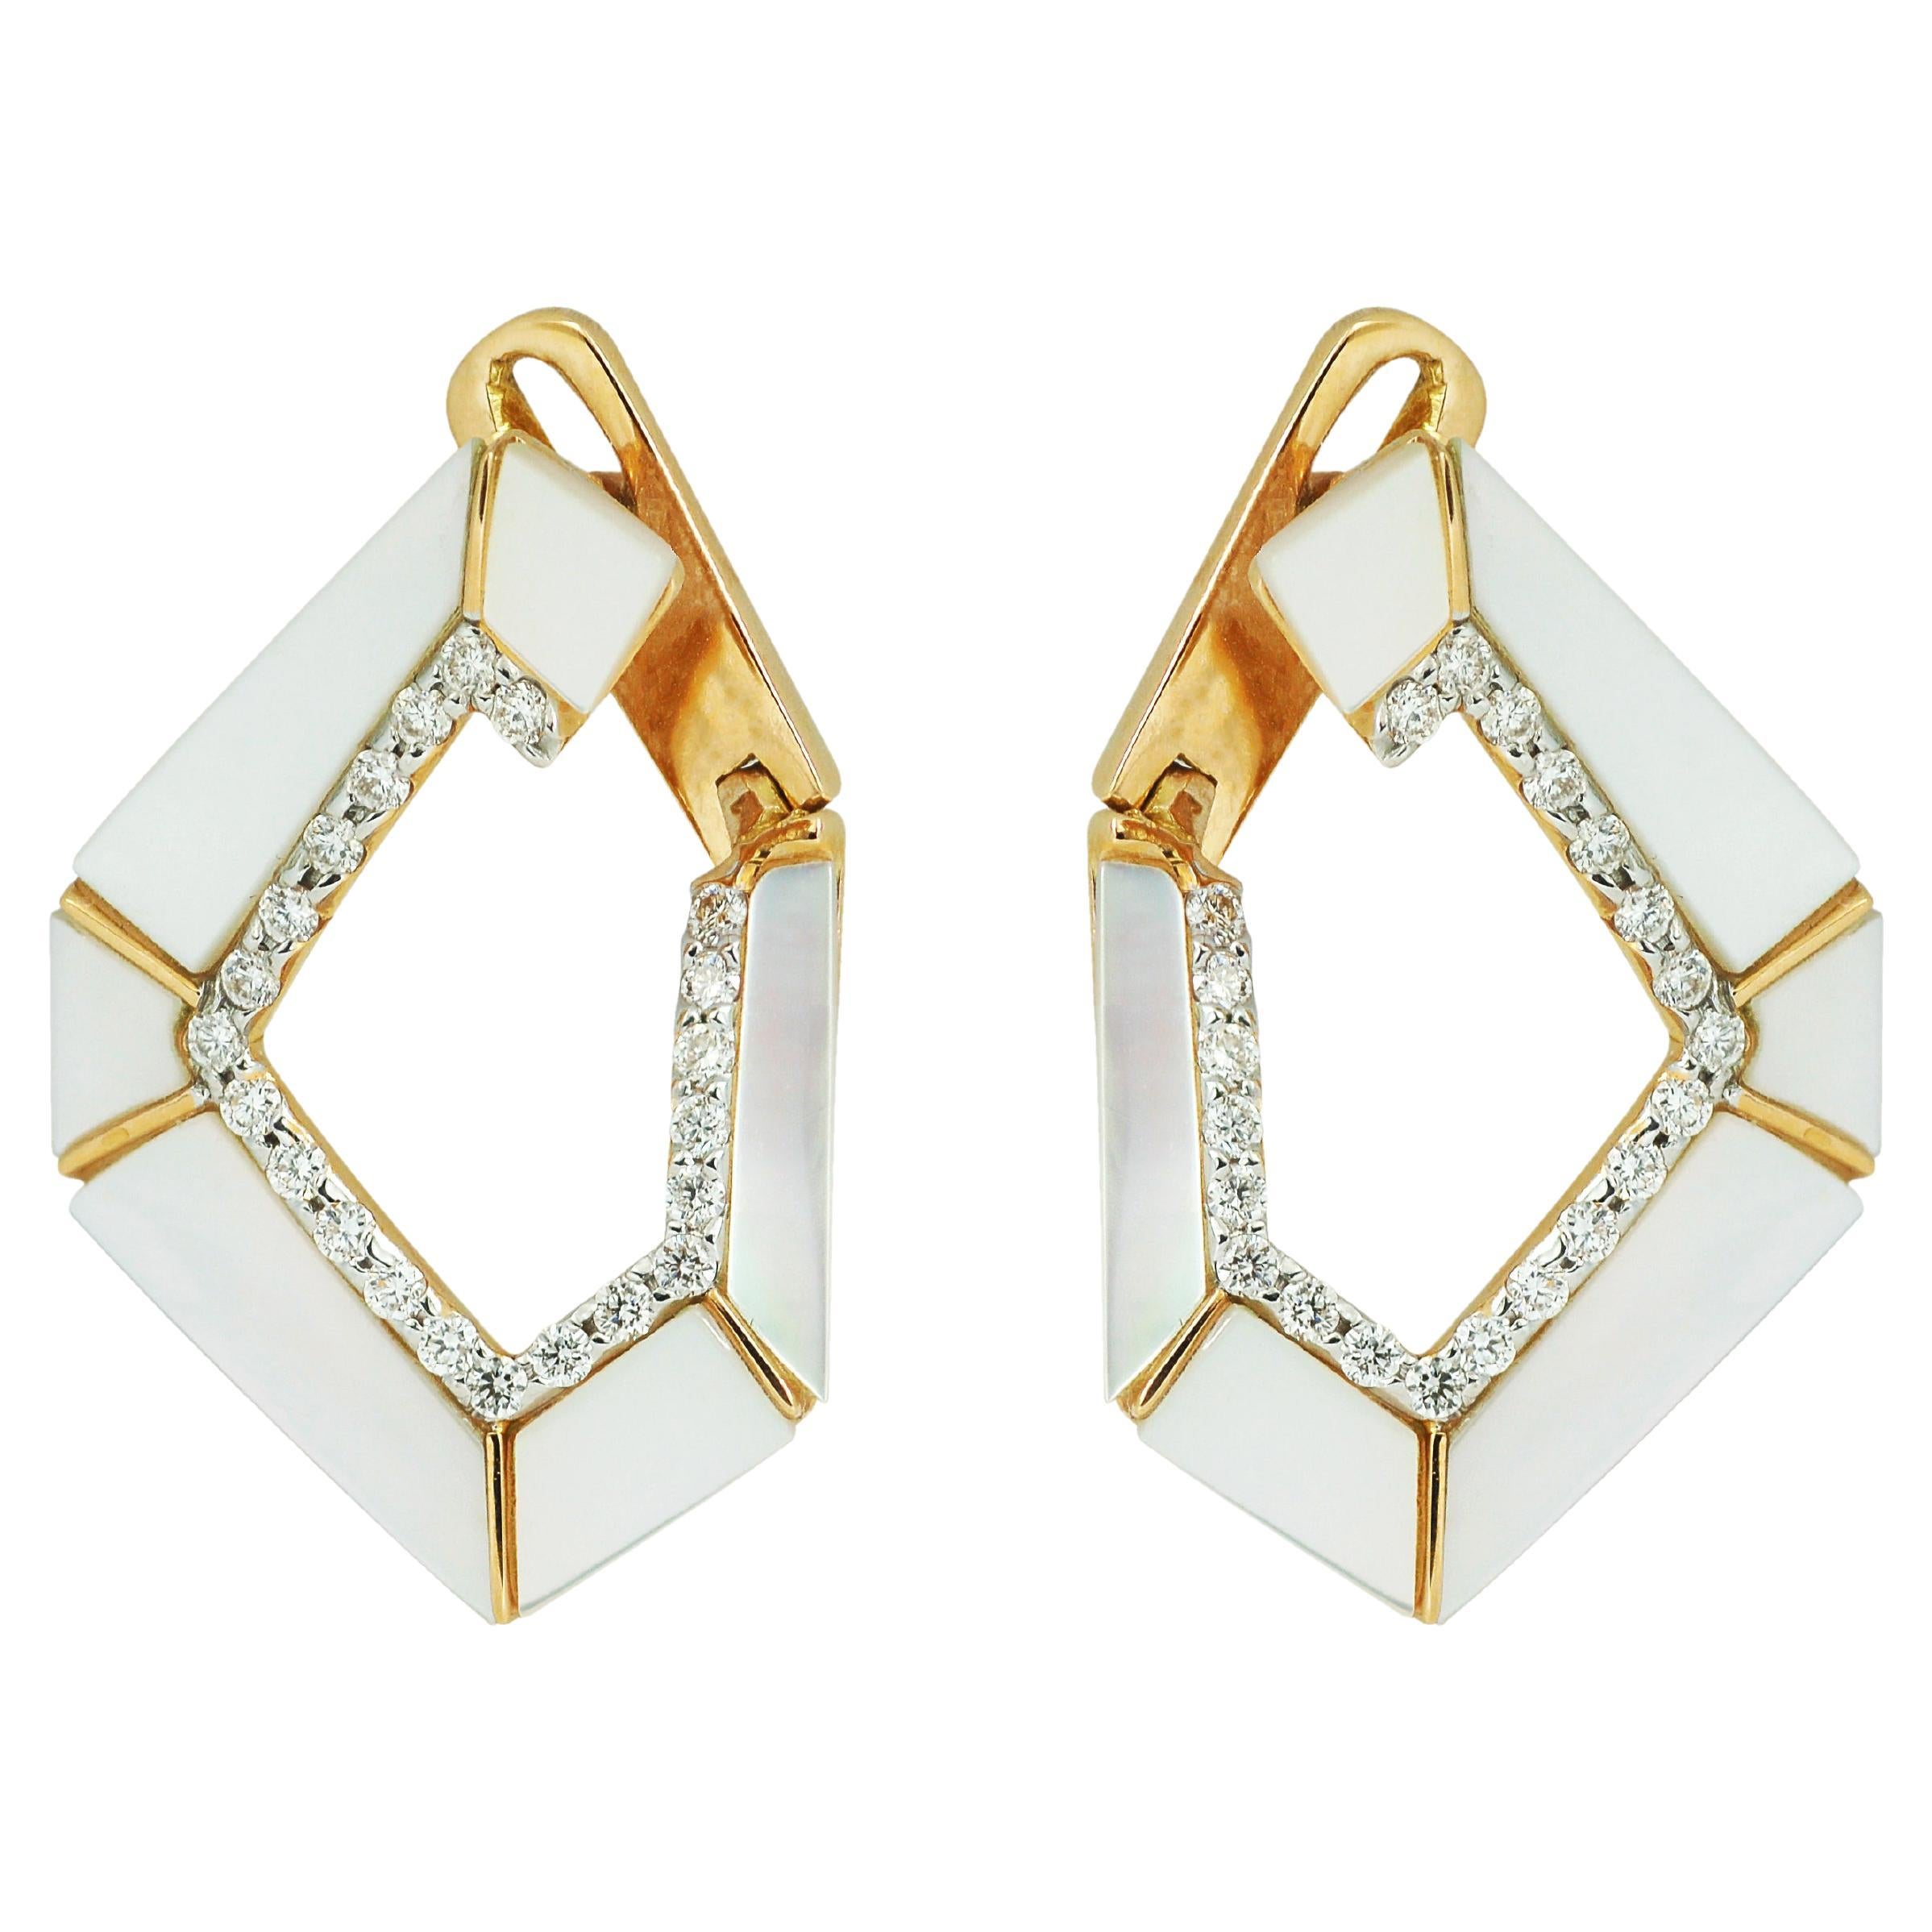 Origami Glieder Nr. 5 Perlmutt- und Diamant Grande-Ohrringe 18k Gold